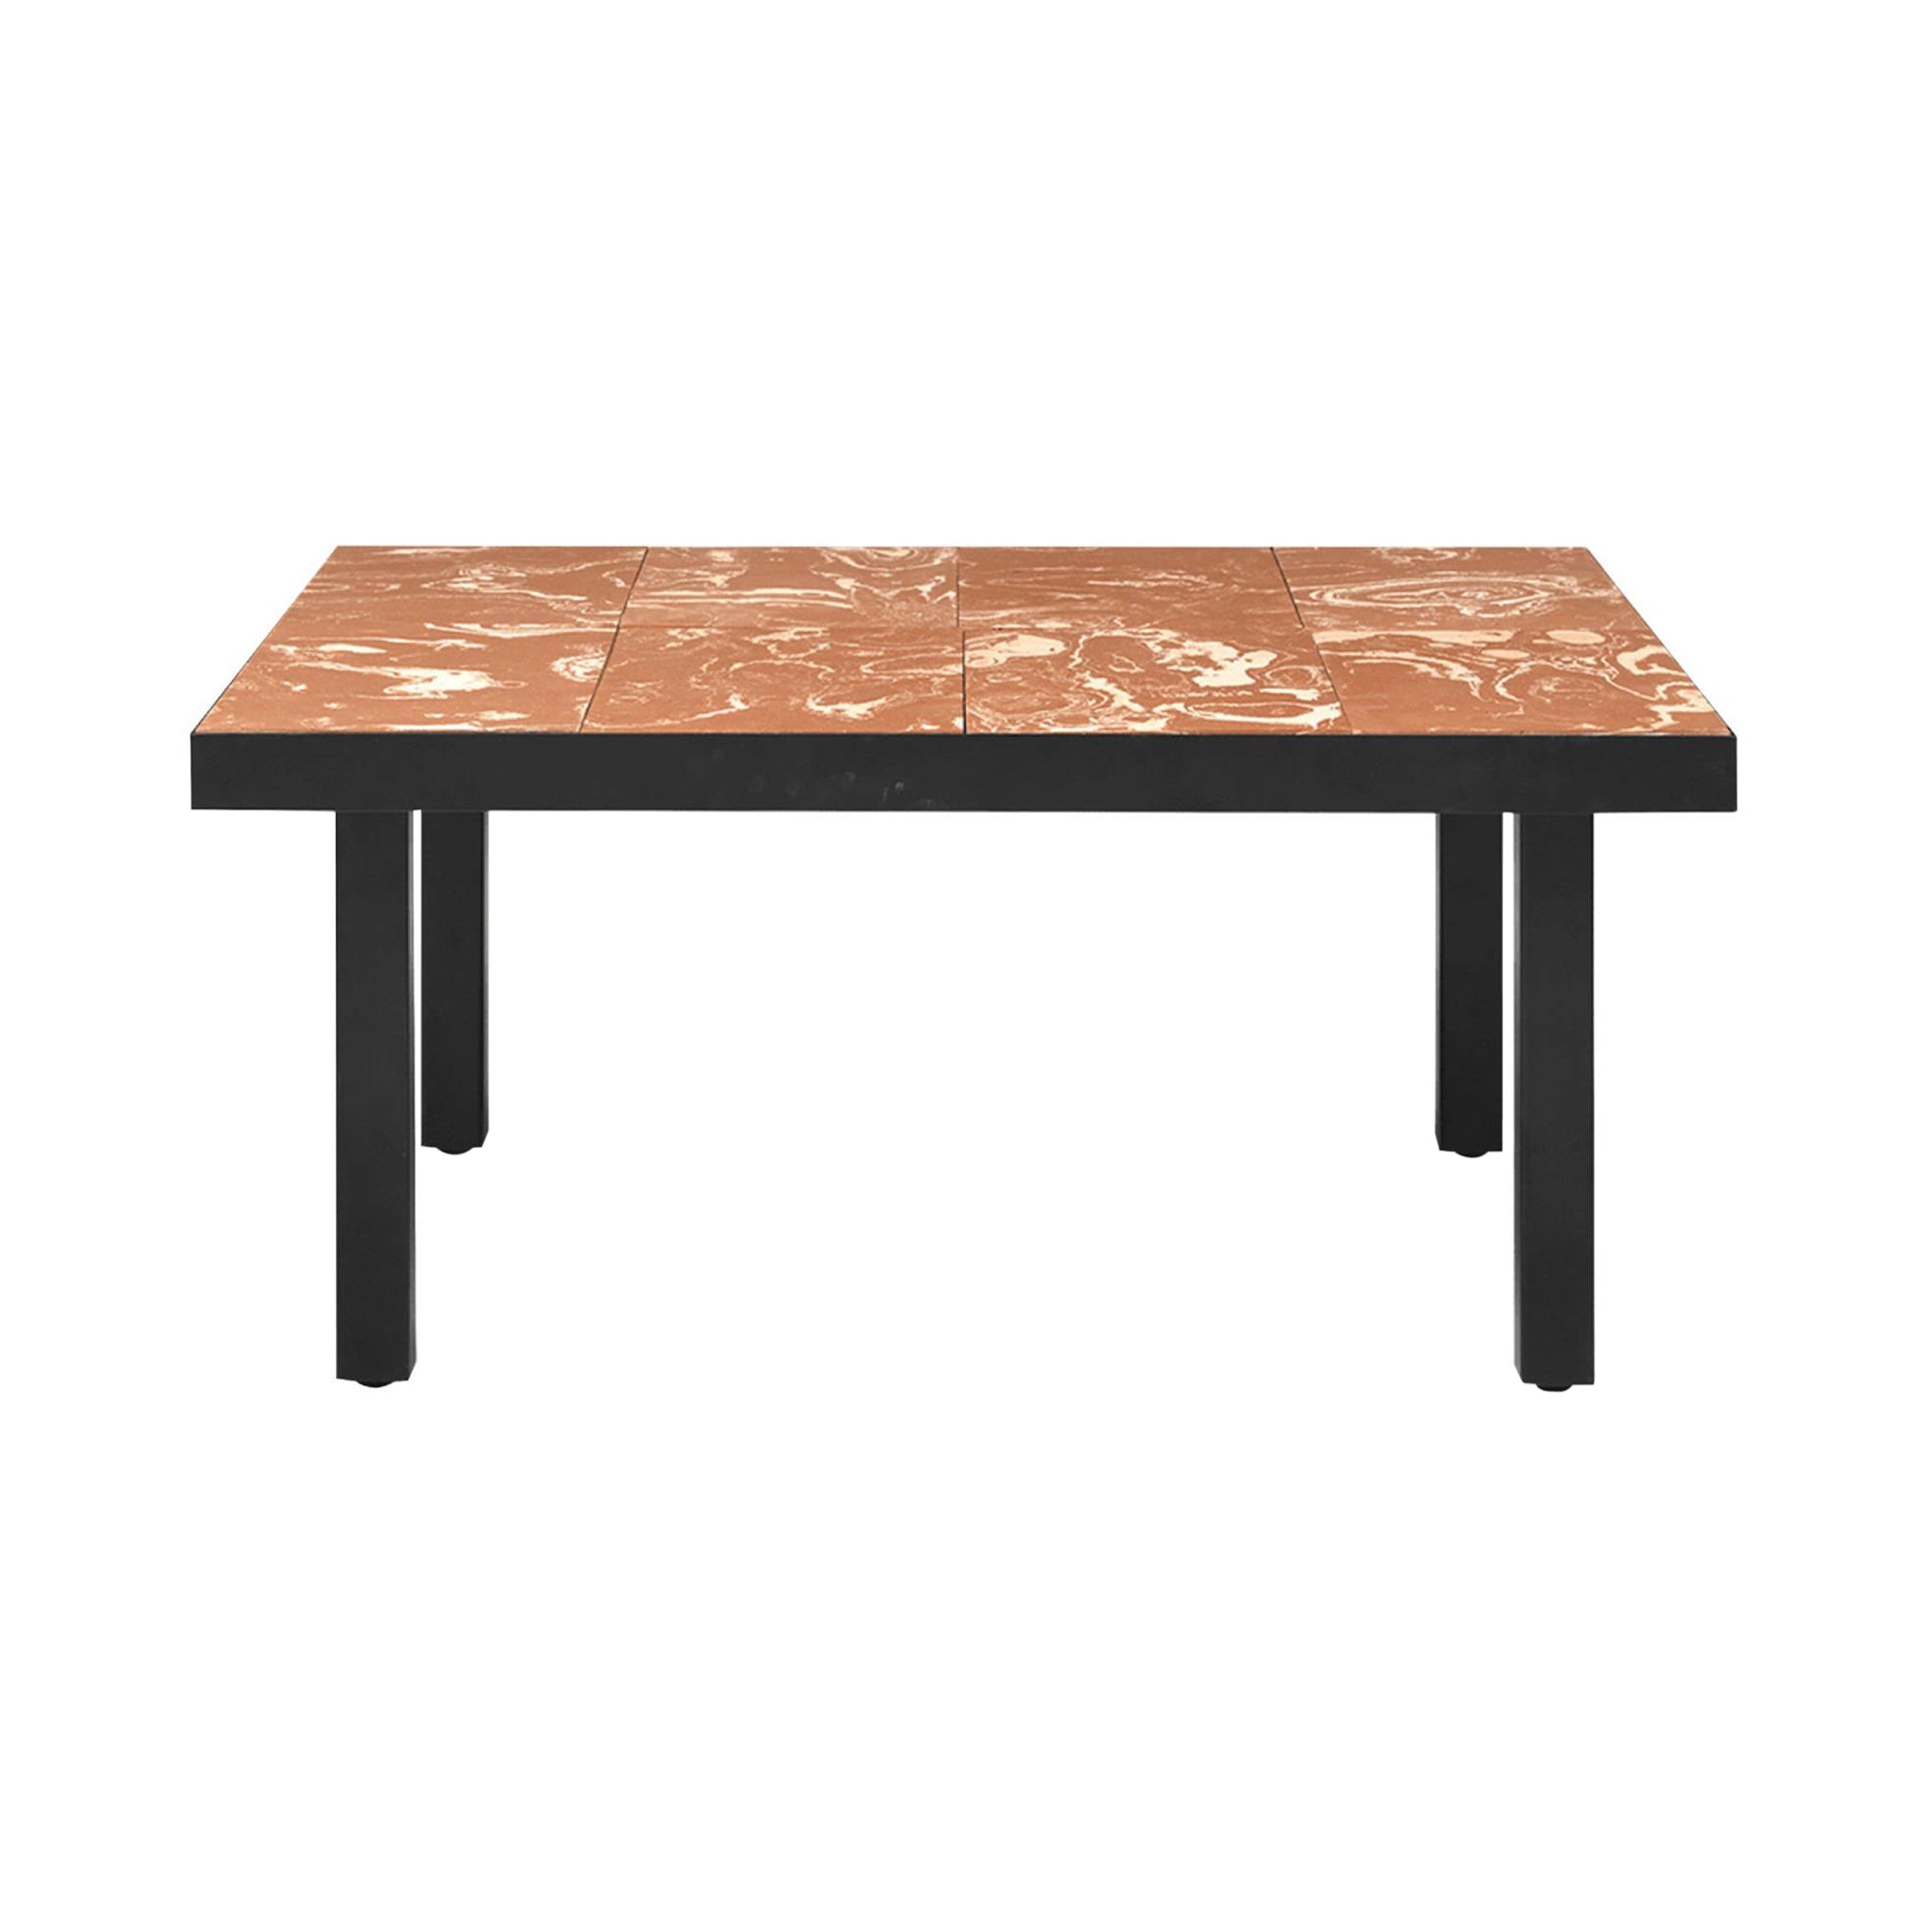 Flod Coffee Table: Terracotta